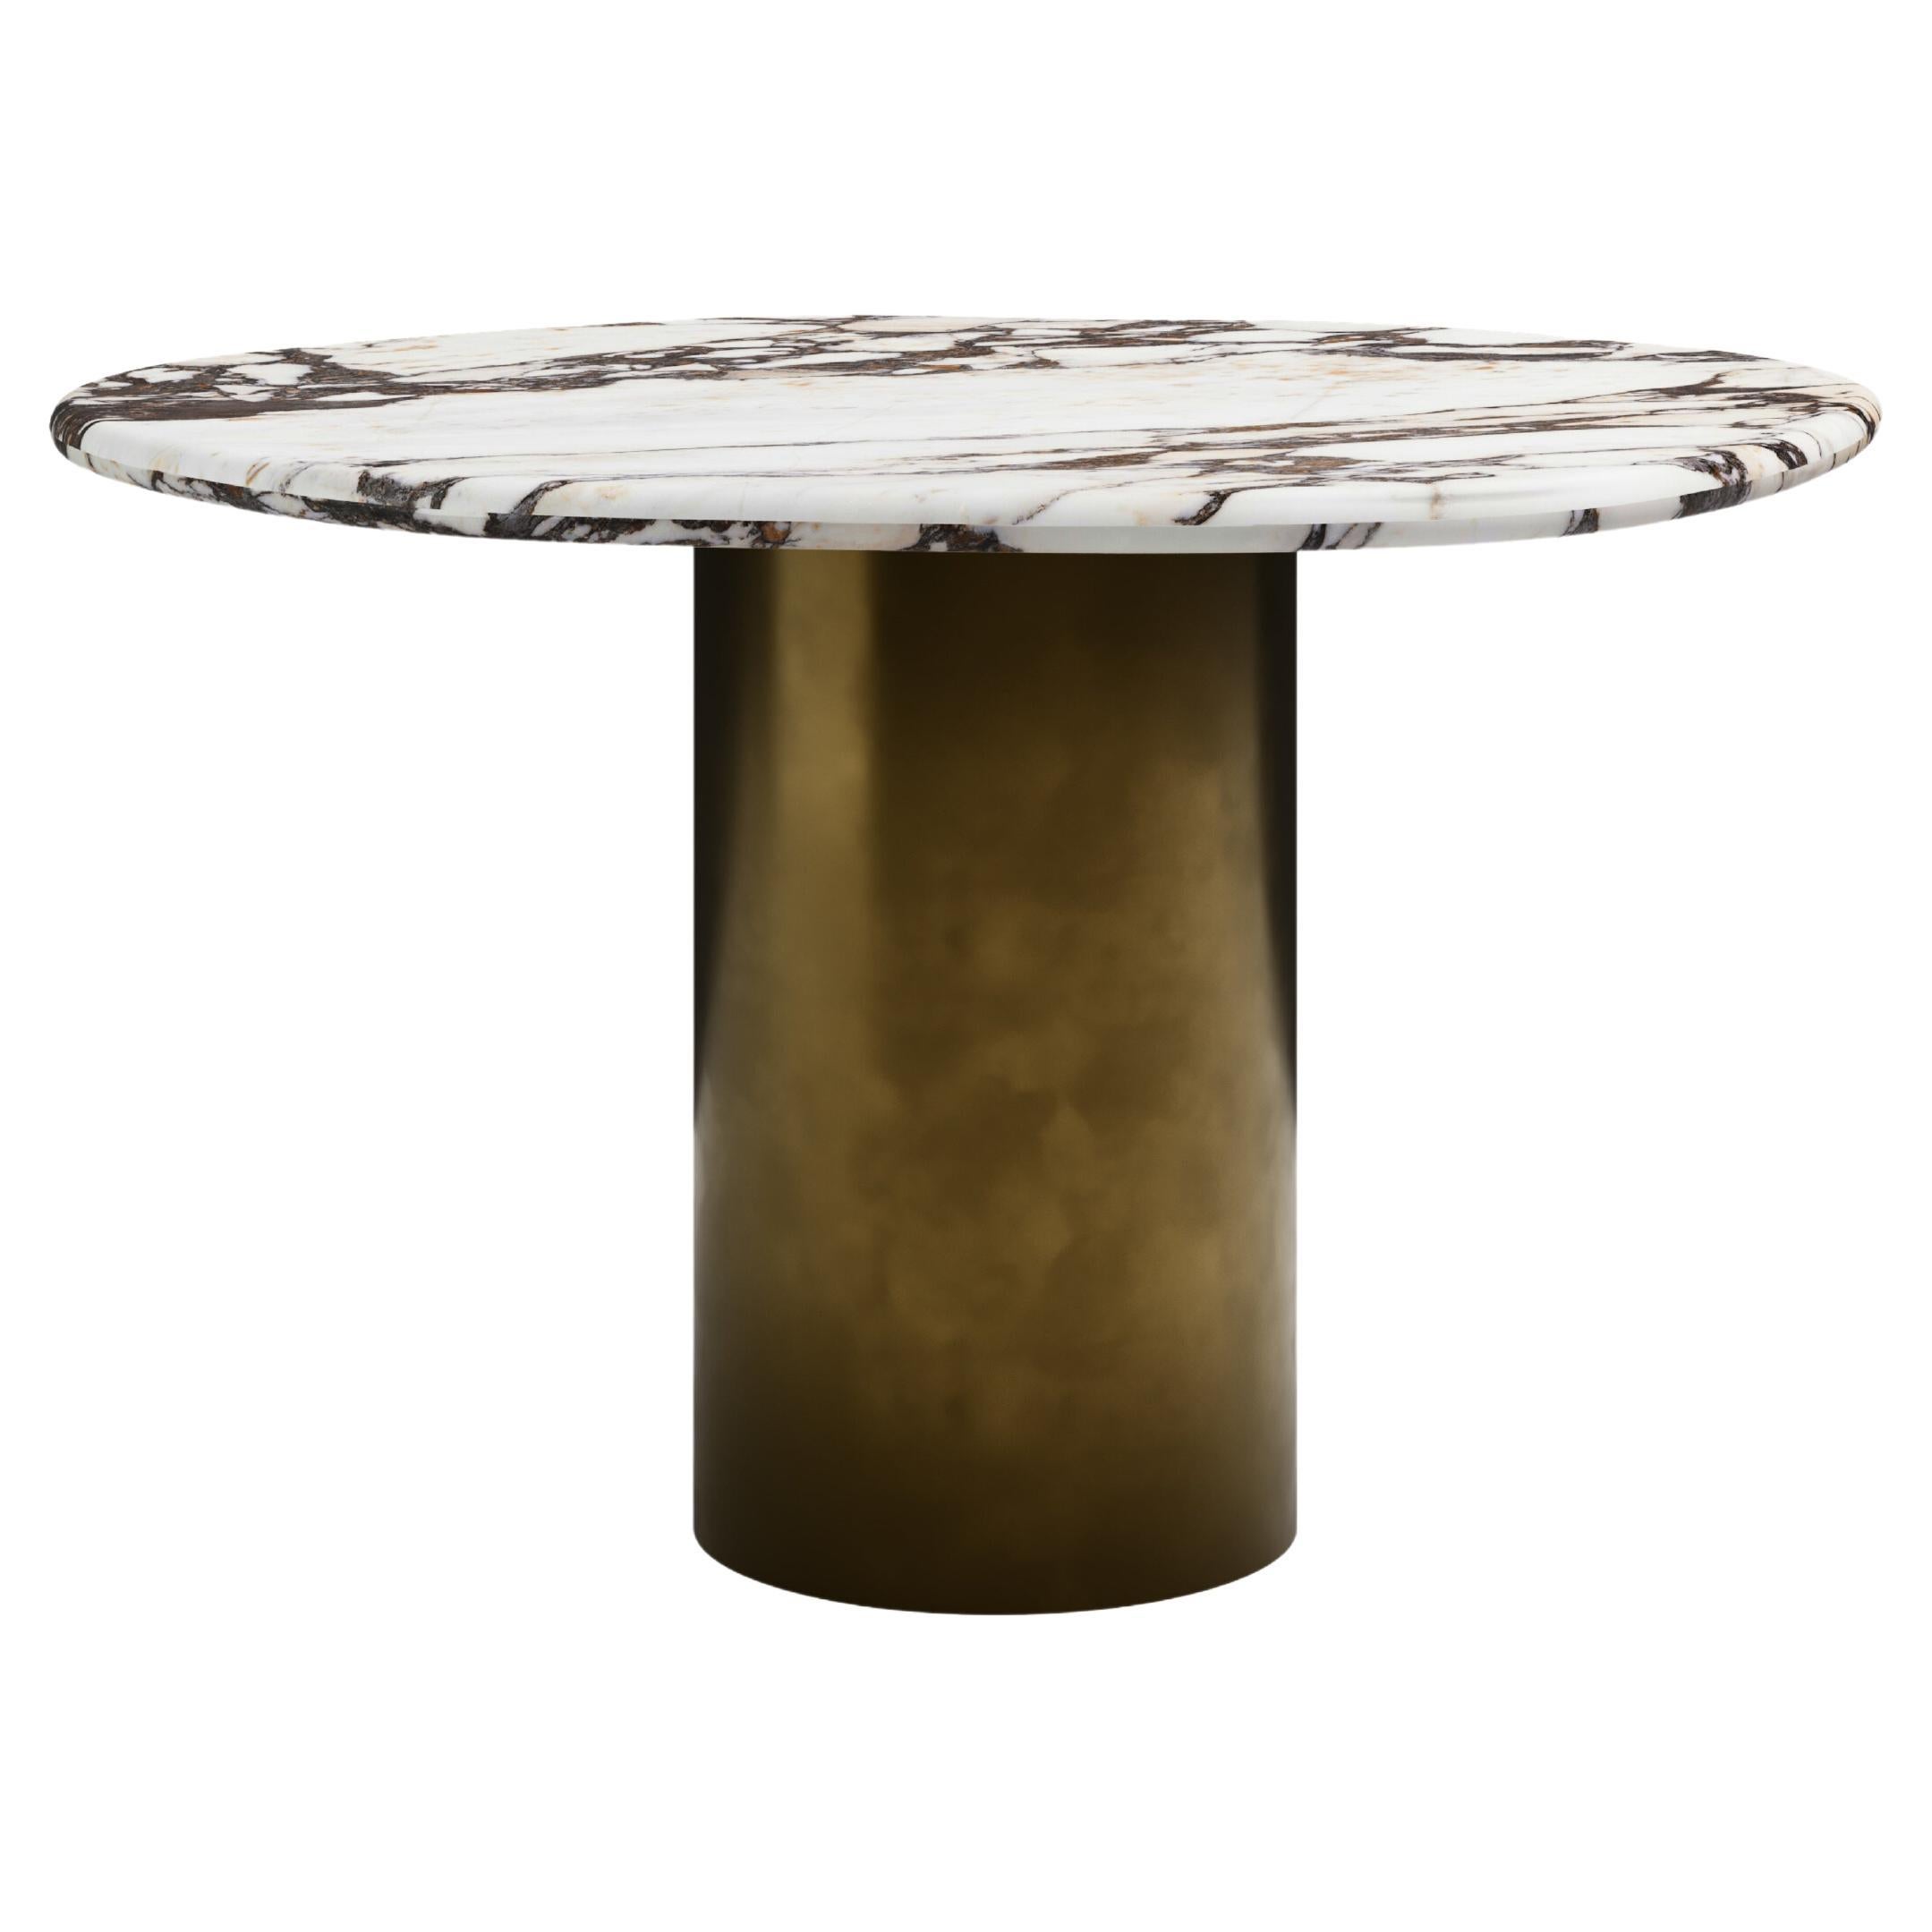 FORM(LA) Lago Round Dining Table 42”L x 42”W x 30”H Viola Marble & Bronze For Sale